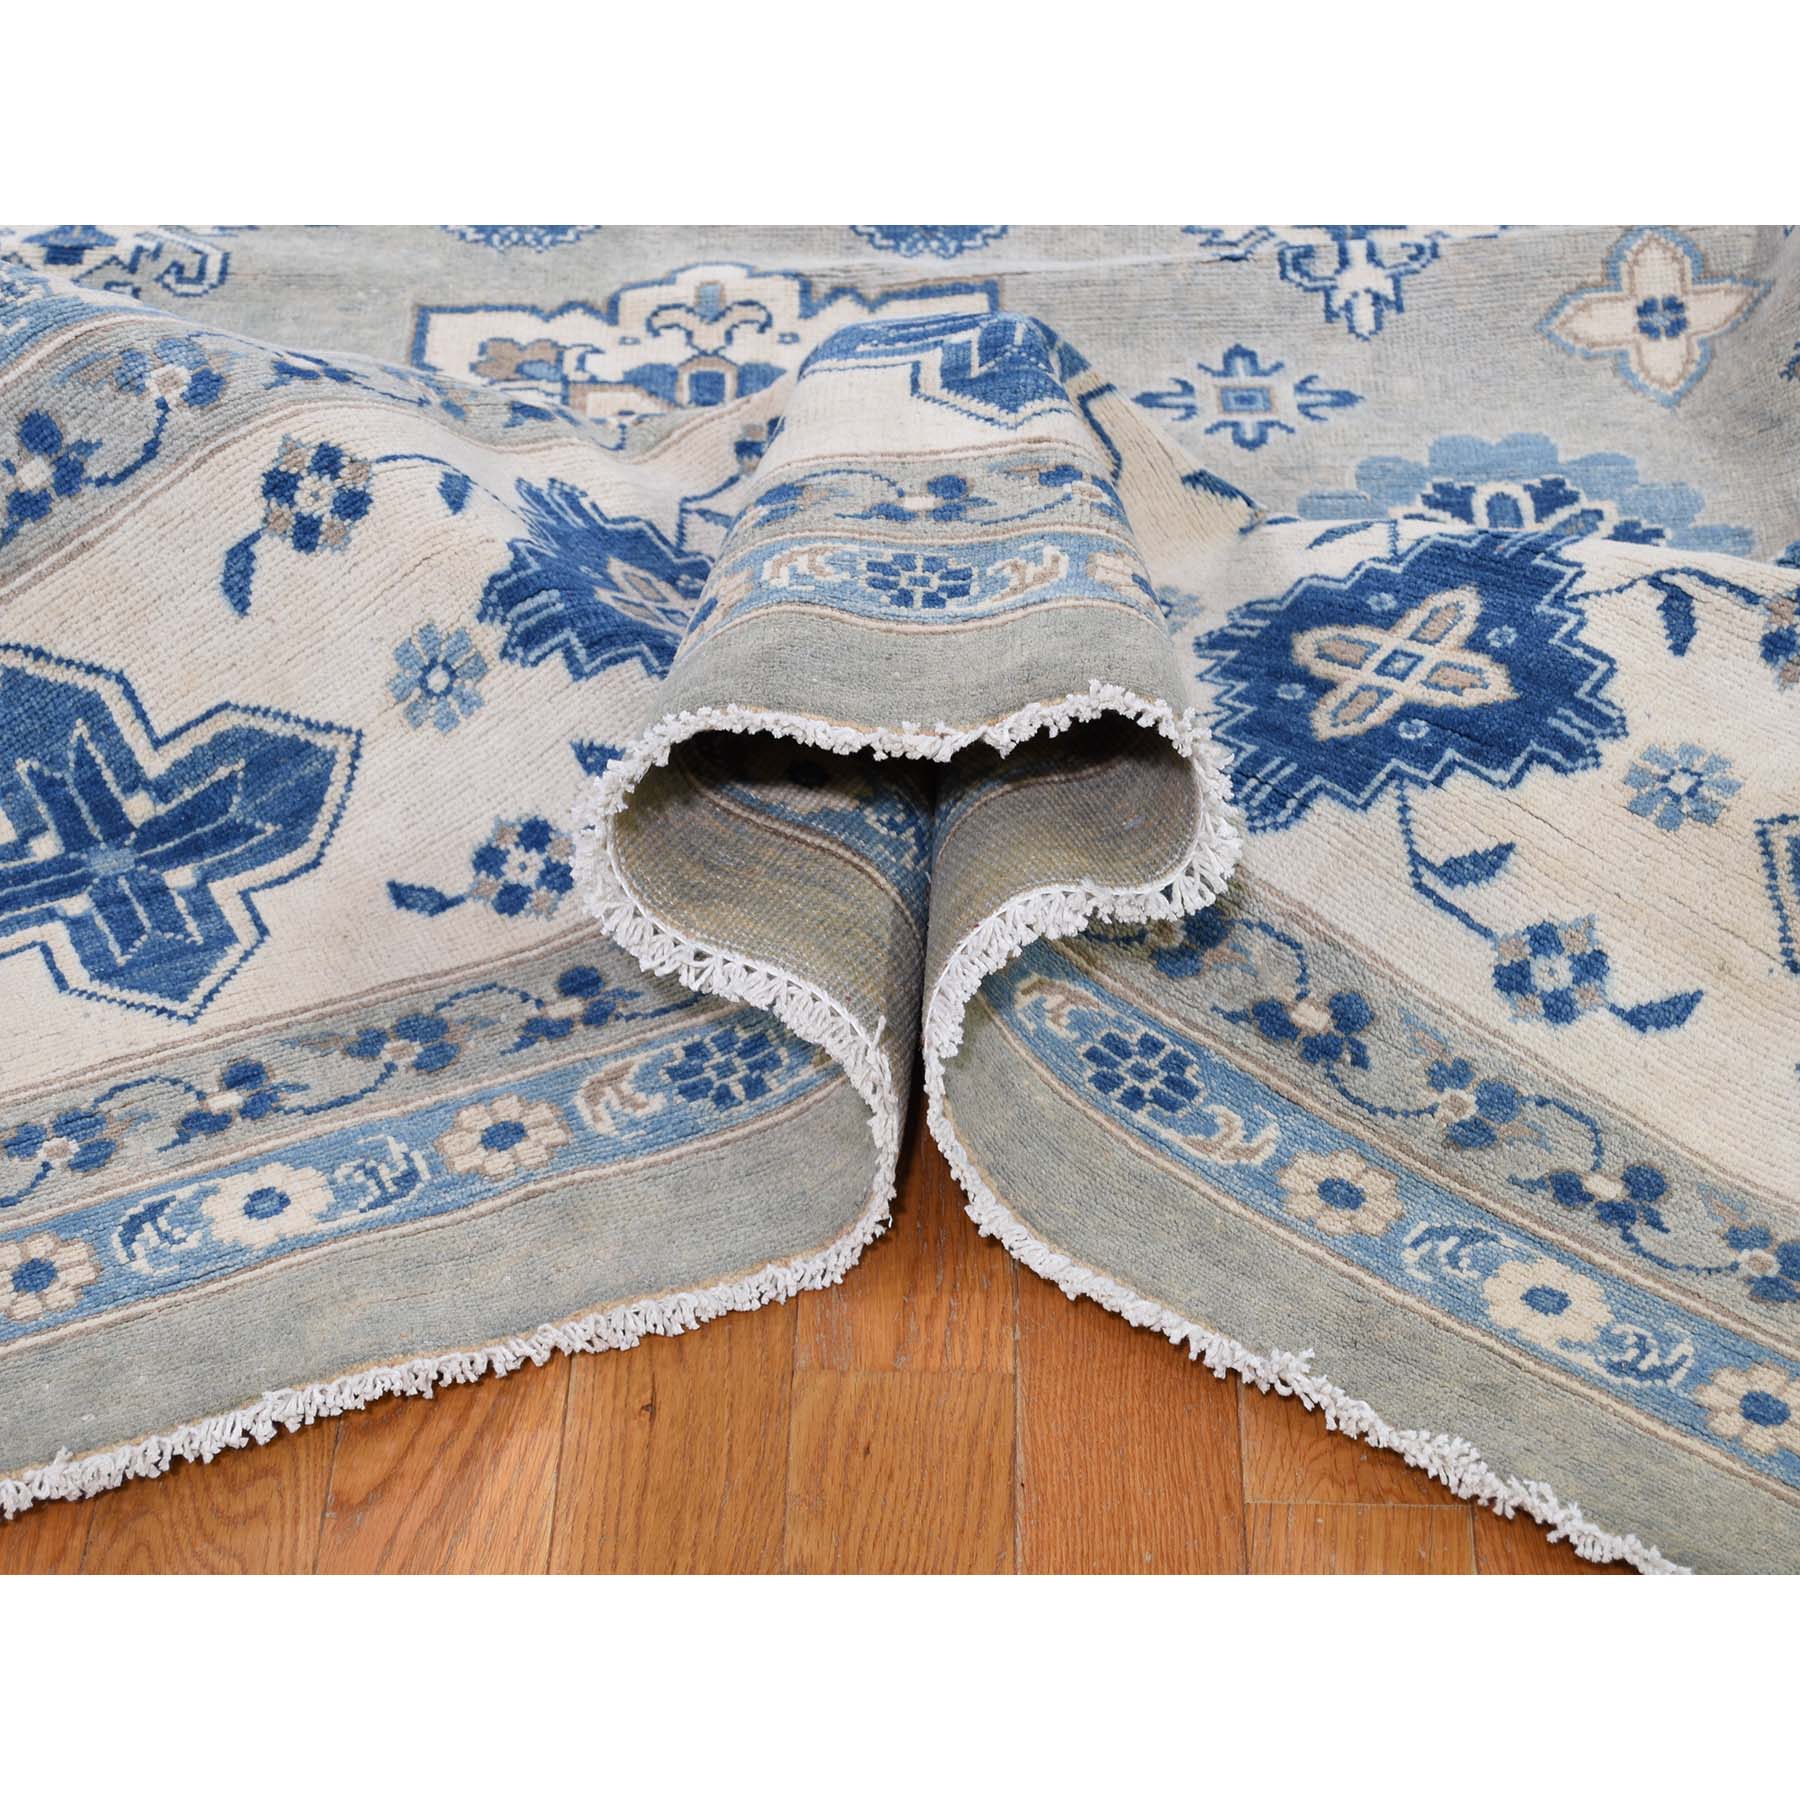 10-3 x13-6  Vintage Look Kazak Pure Wool Hand-Knotted Oriental Rug 